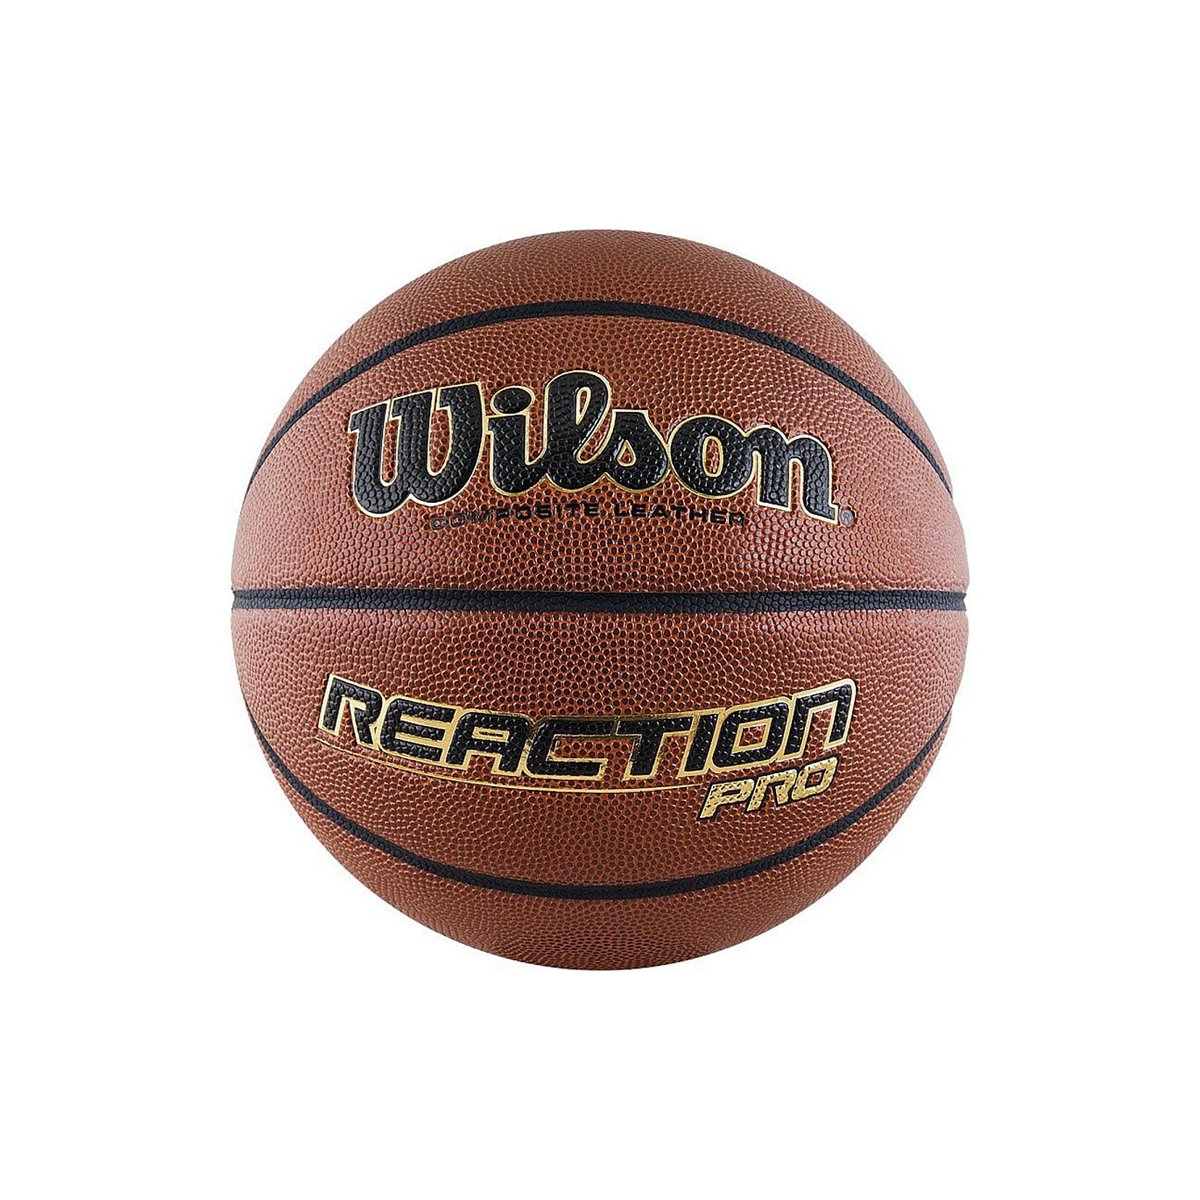 Баскетбольный мяч Wilson Reaction Pro 295 Bskt 7 brown